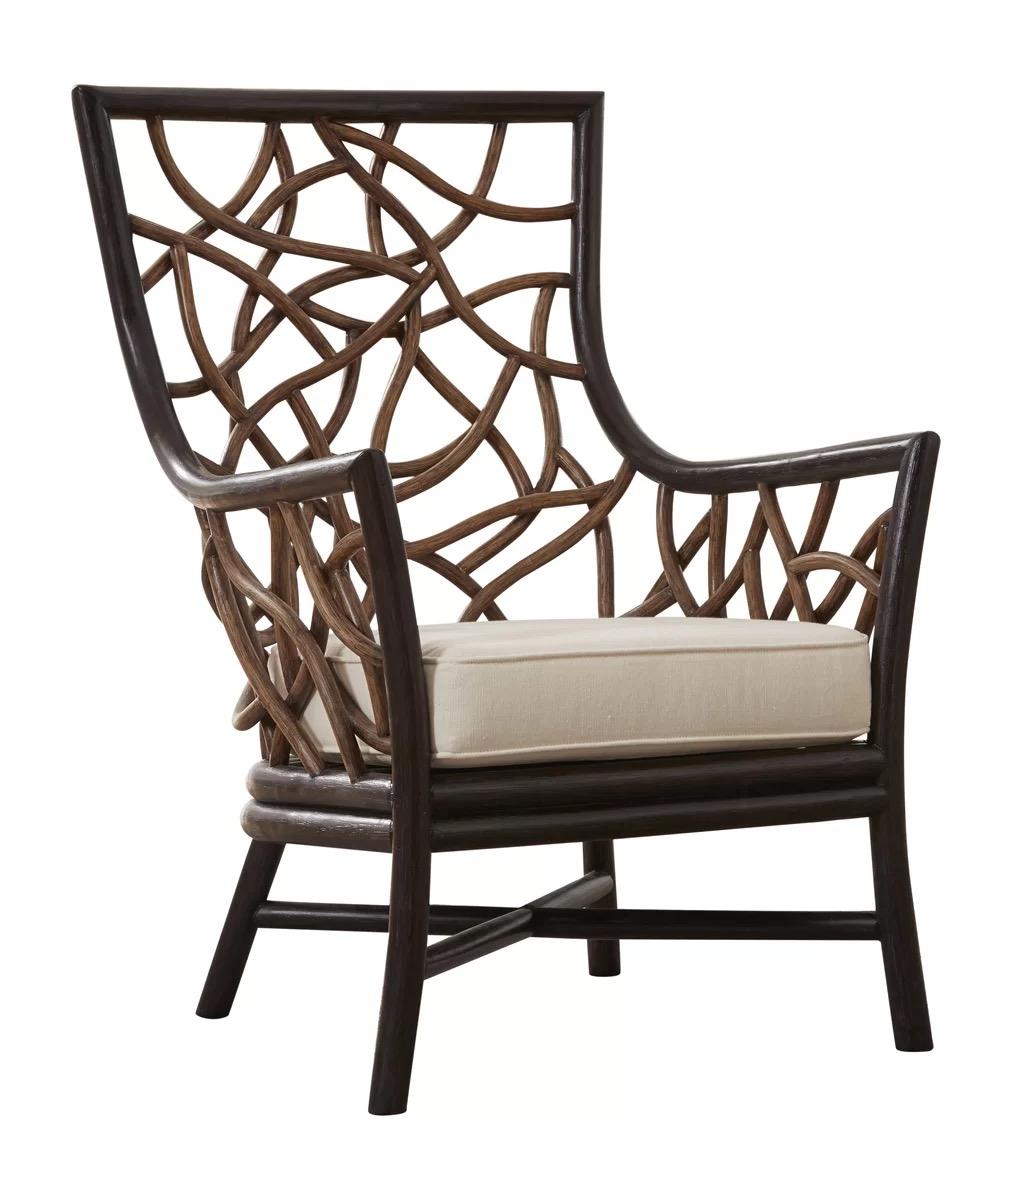 Classic Outdoor Chair Trinidad PJS-1401-BLK-OC in Black, Beige Fabric